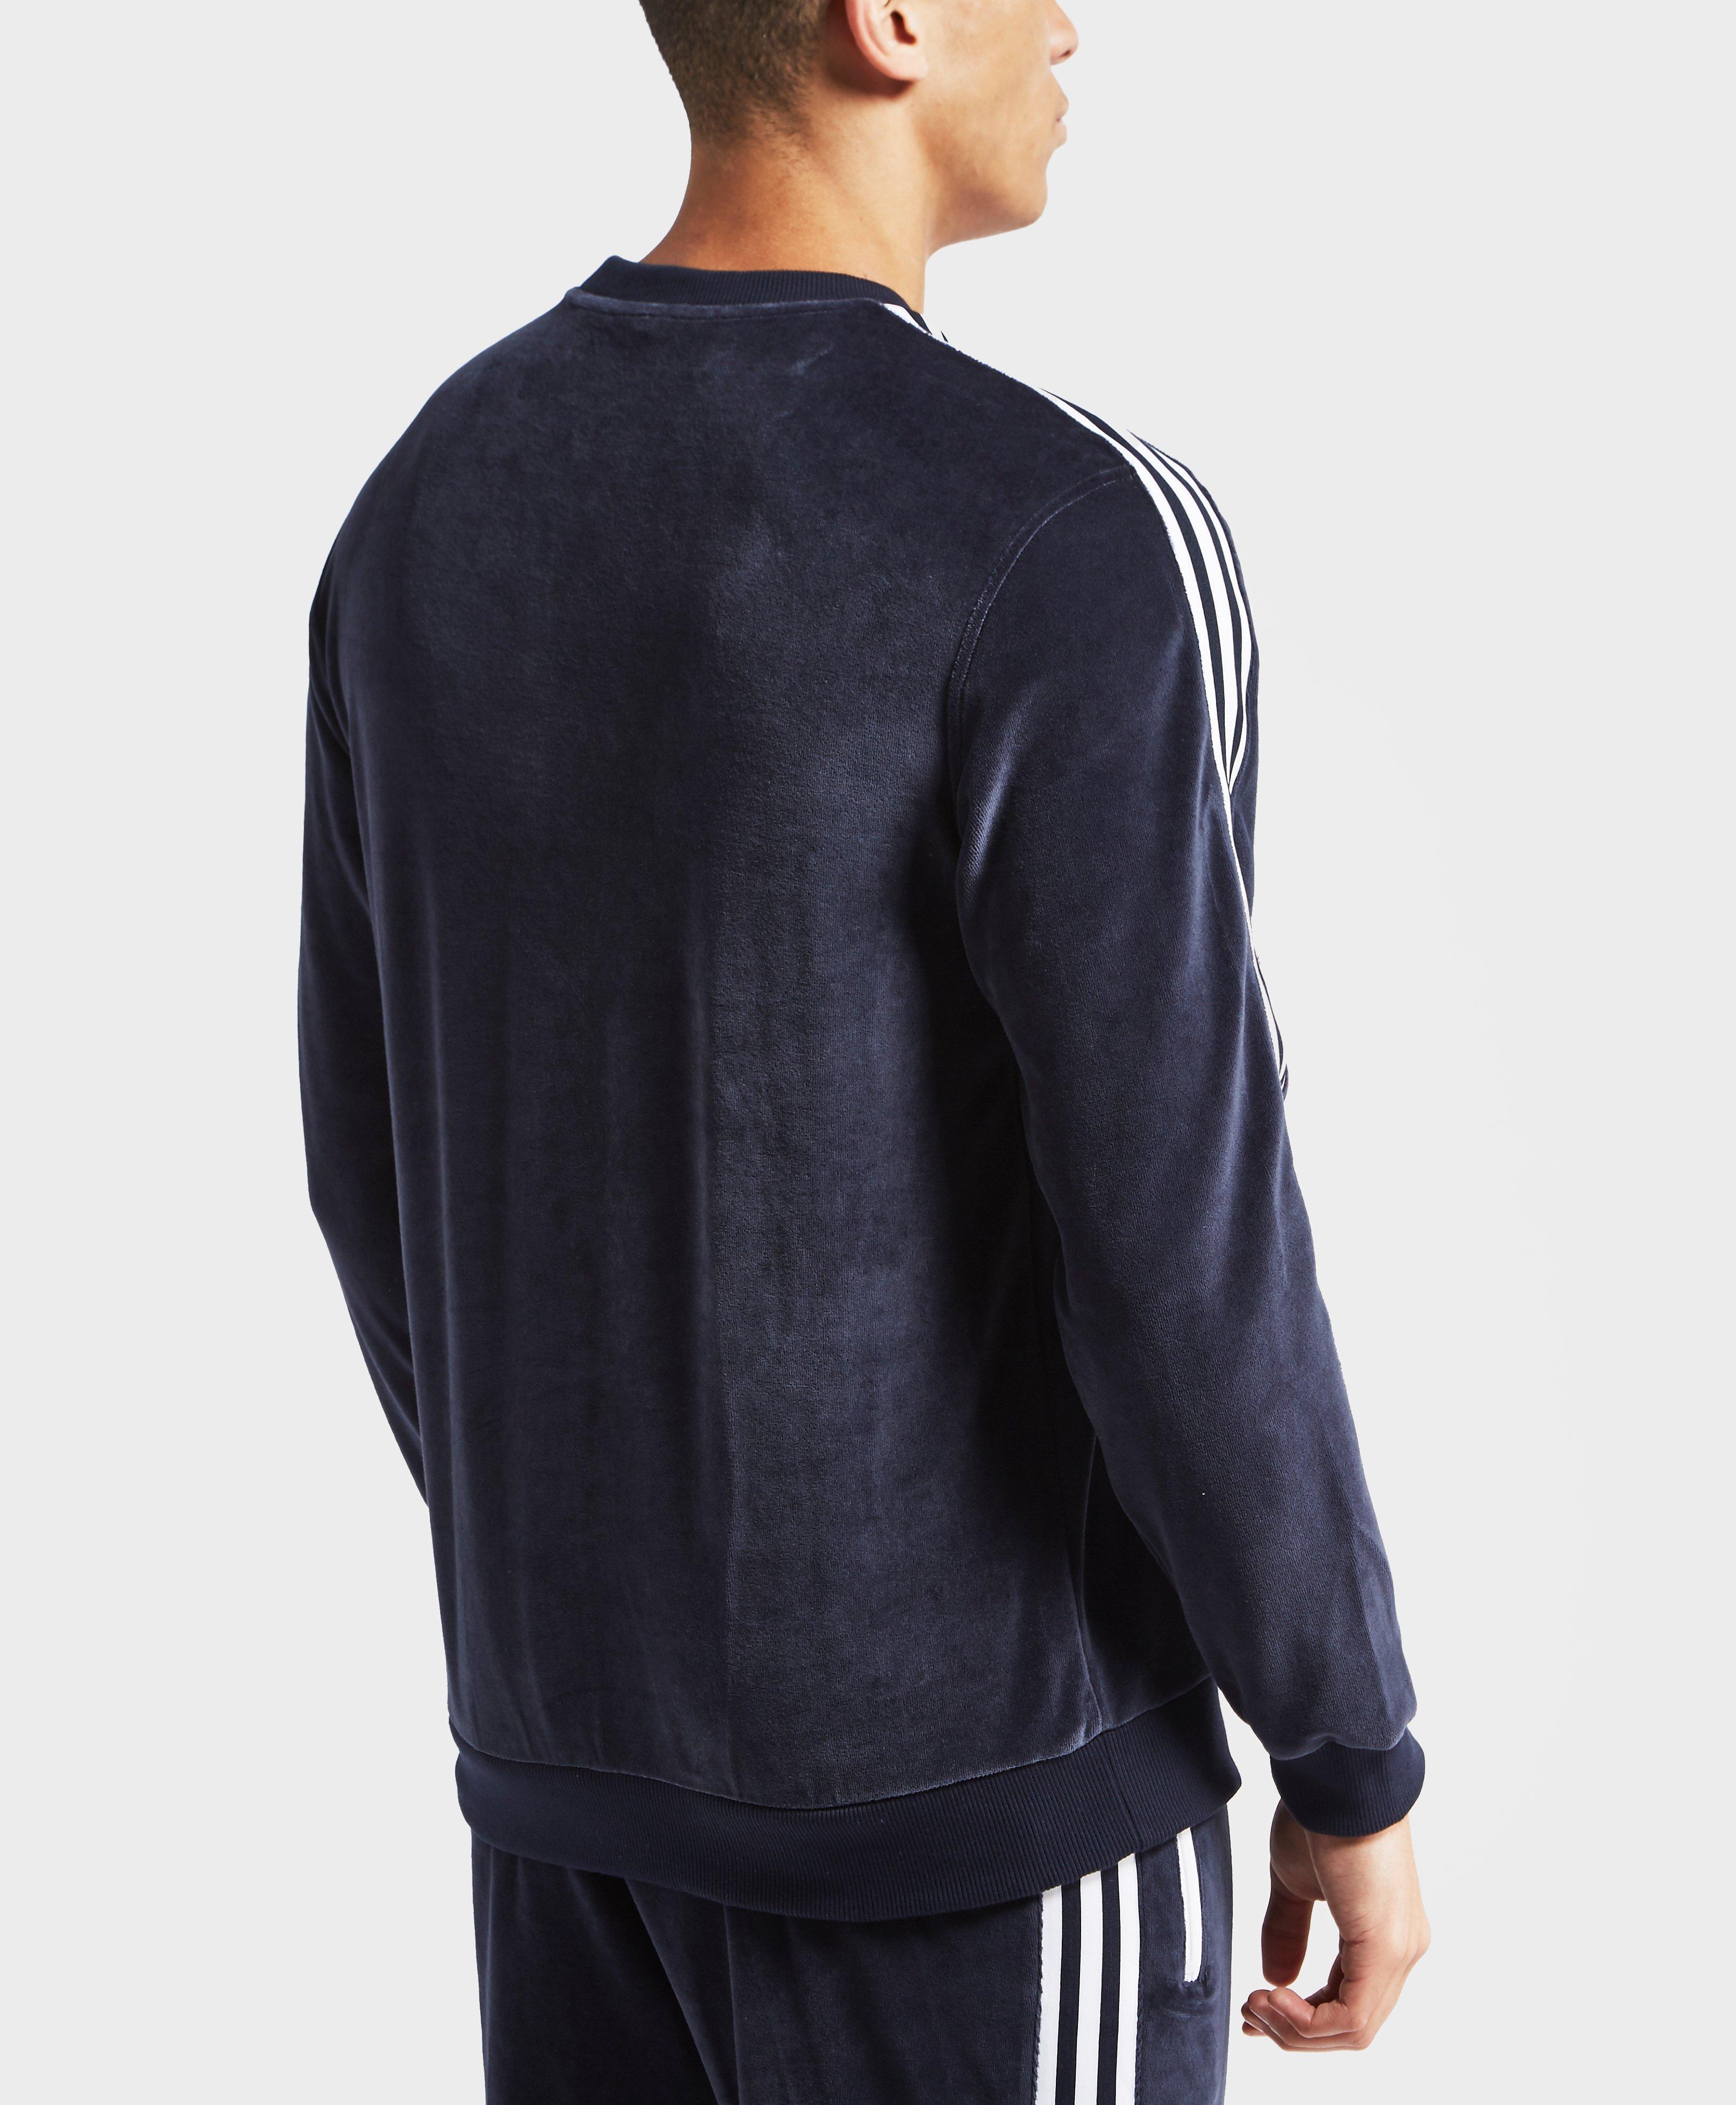 adidas Originals Cotton Velour Crew Sweatshirt in Blue for Men - Lyst